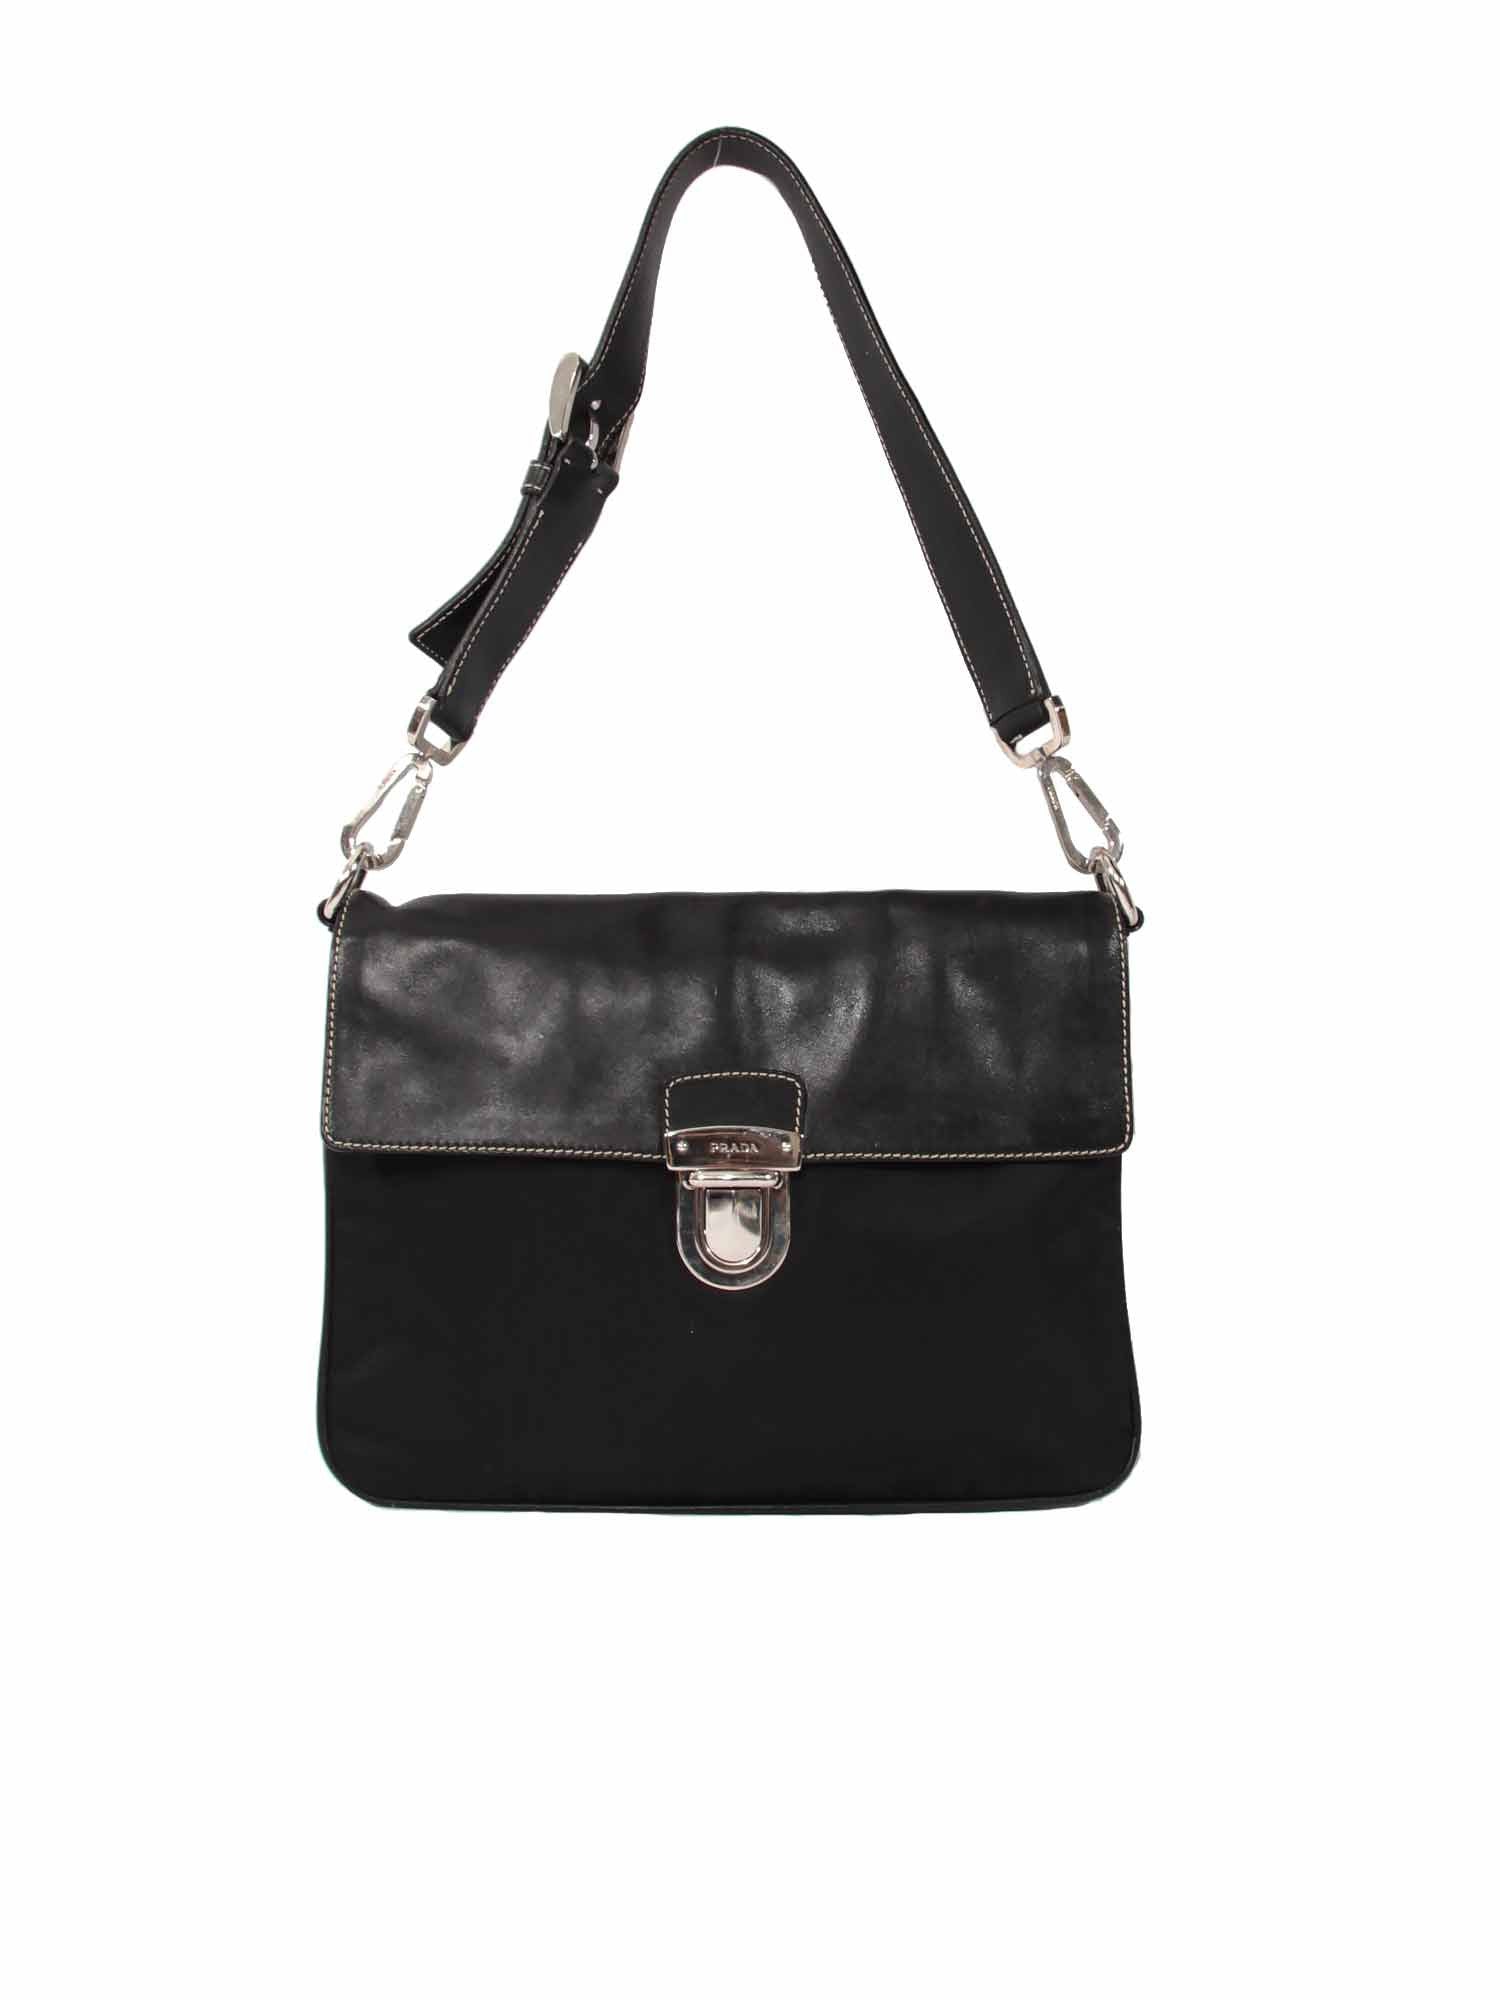 Pre-owned Prada Leather Flap Shoulder Bag | Sabrina's Closet